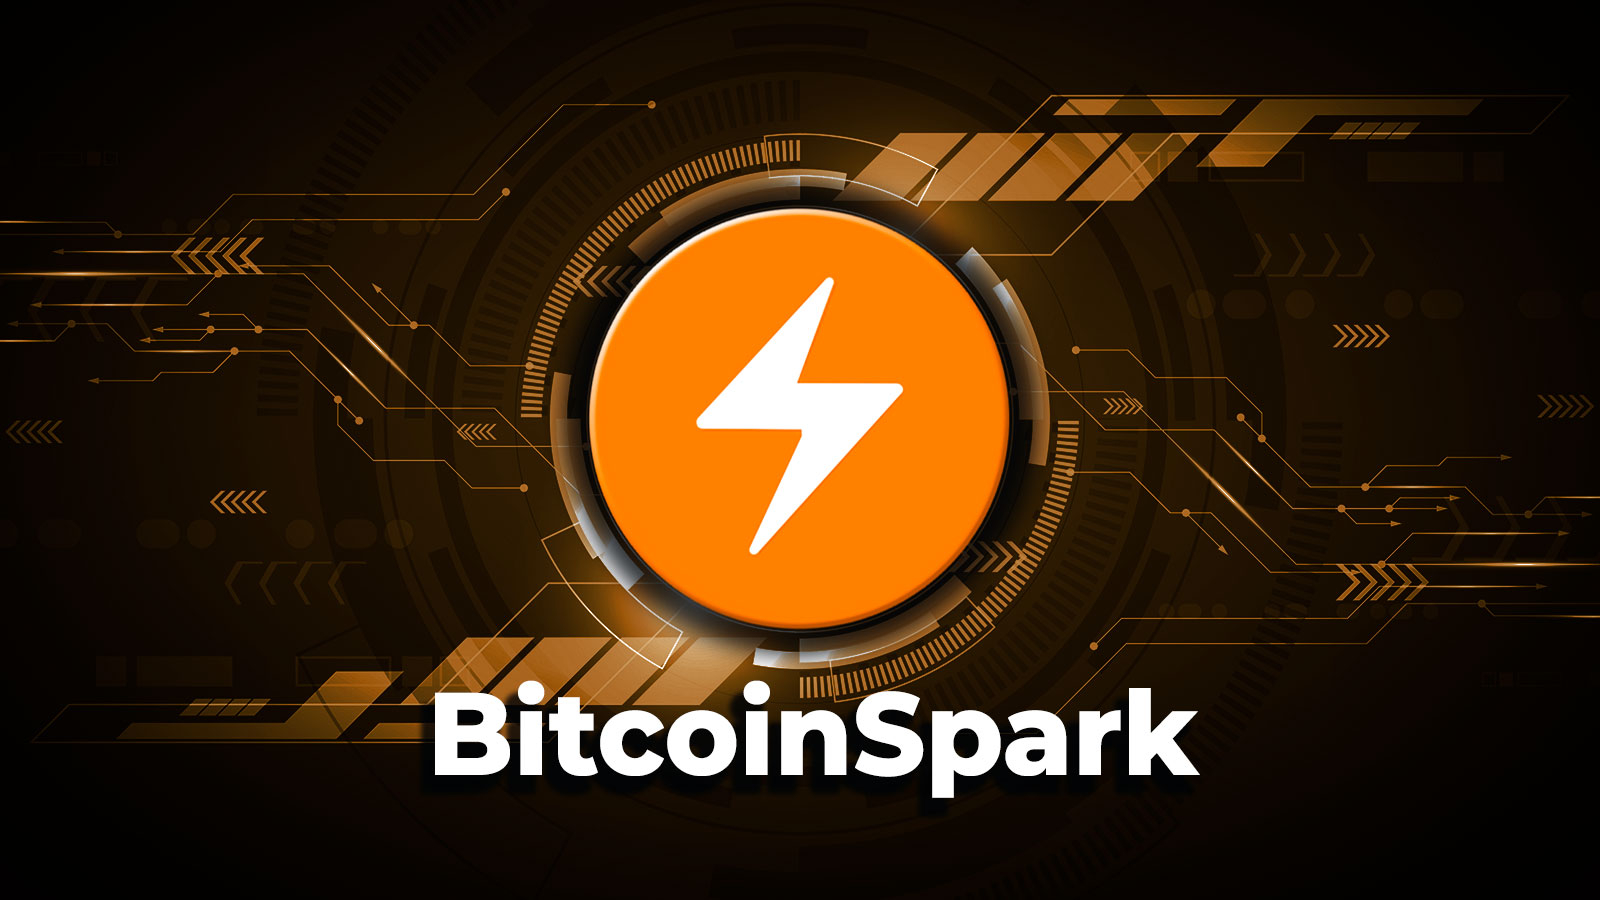 Bitcoin Cash Meets Its Match: An Introduction to Bitcoin Spark